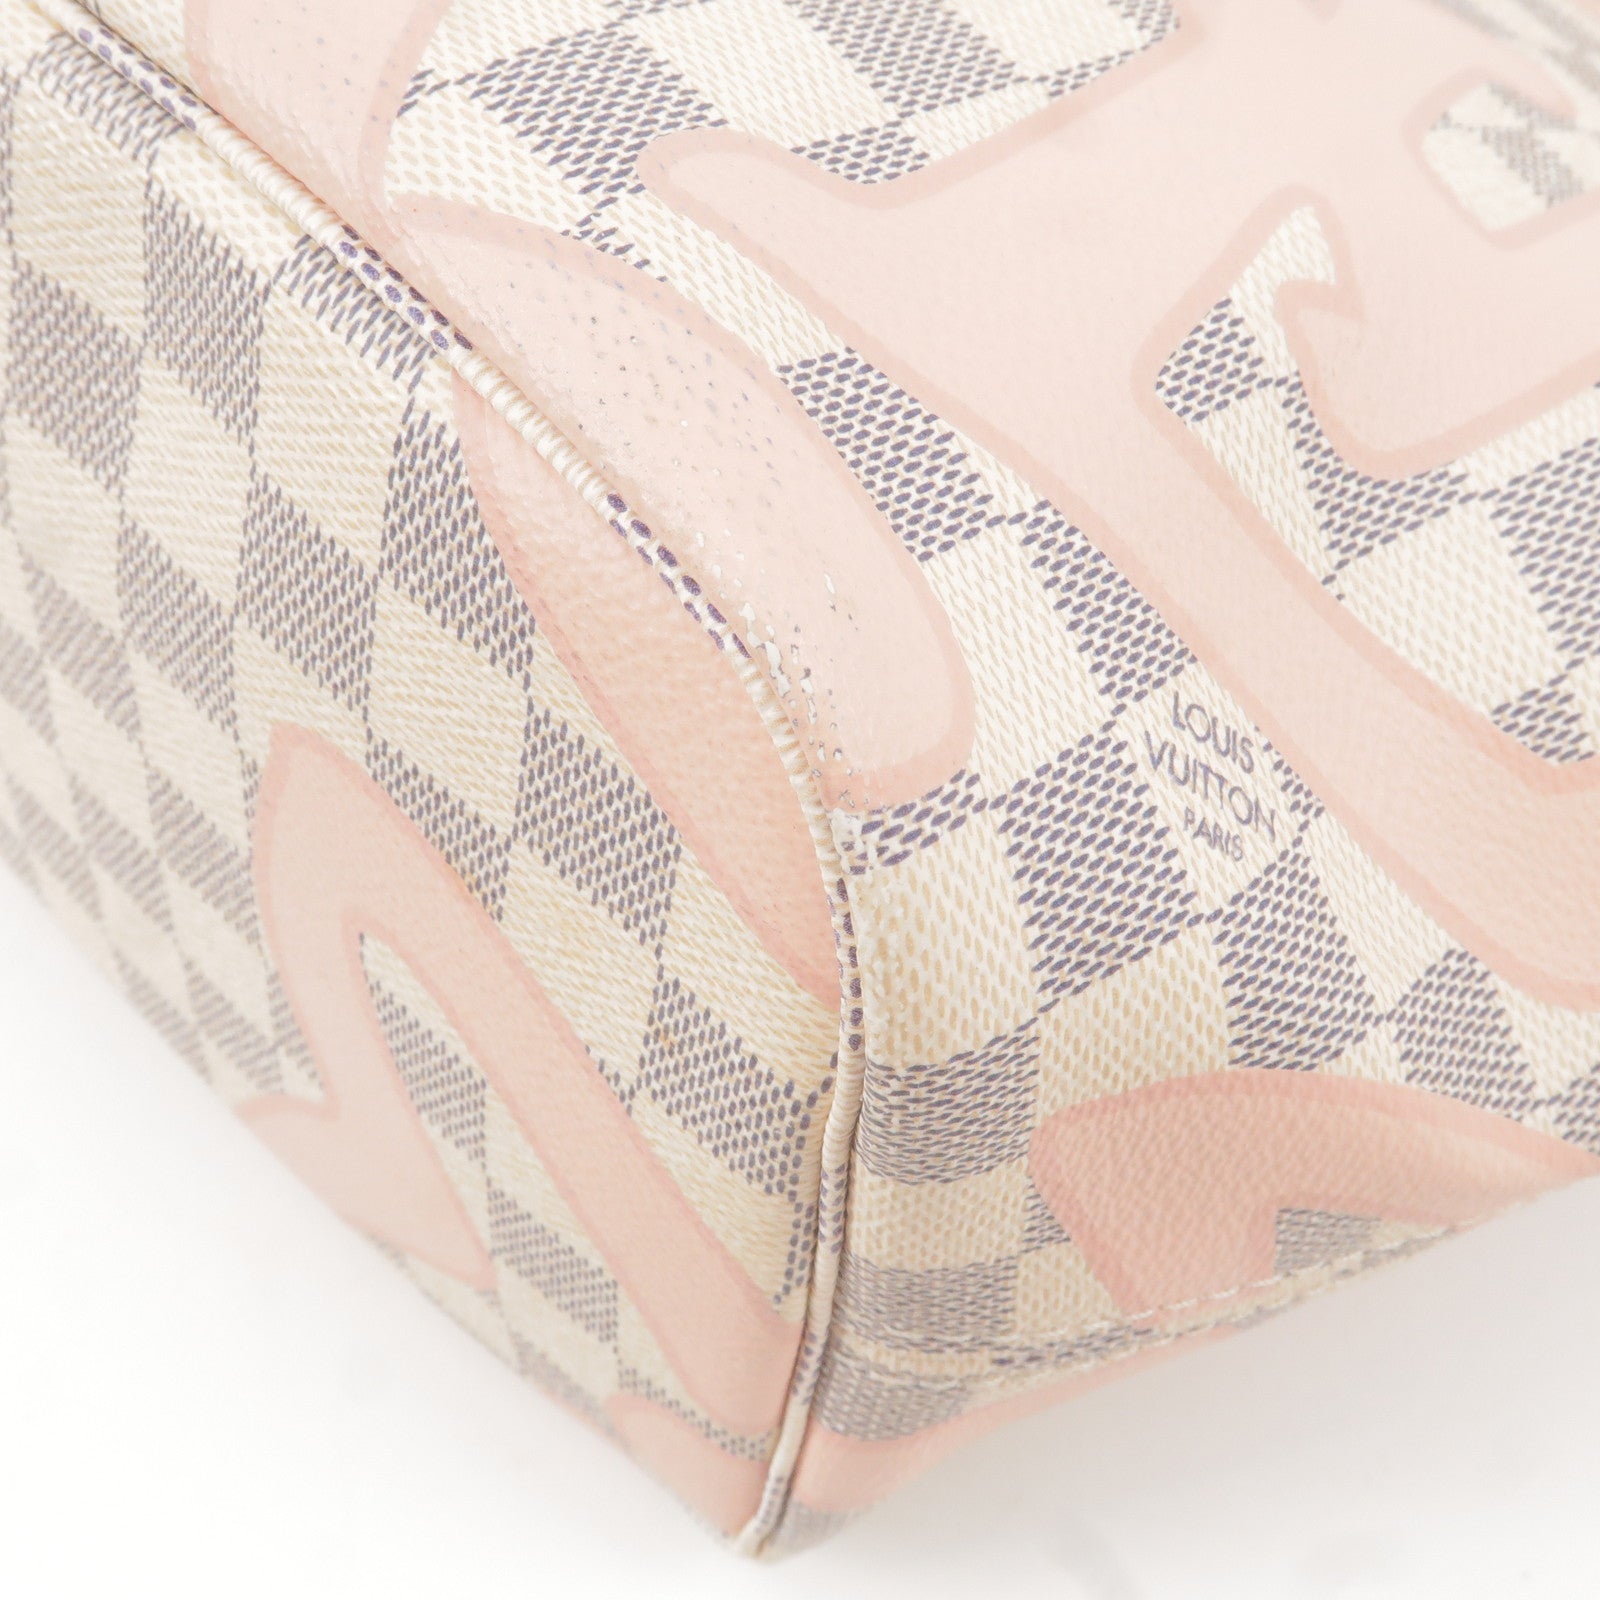 Louis Vuitton Vintage - Damier Azur Tahitienne Neverfull MM Bag